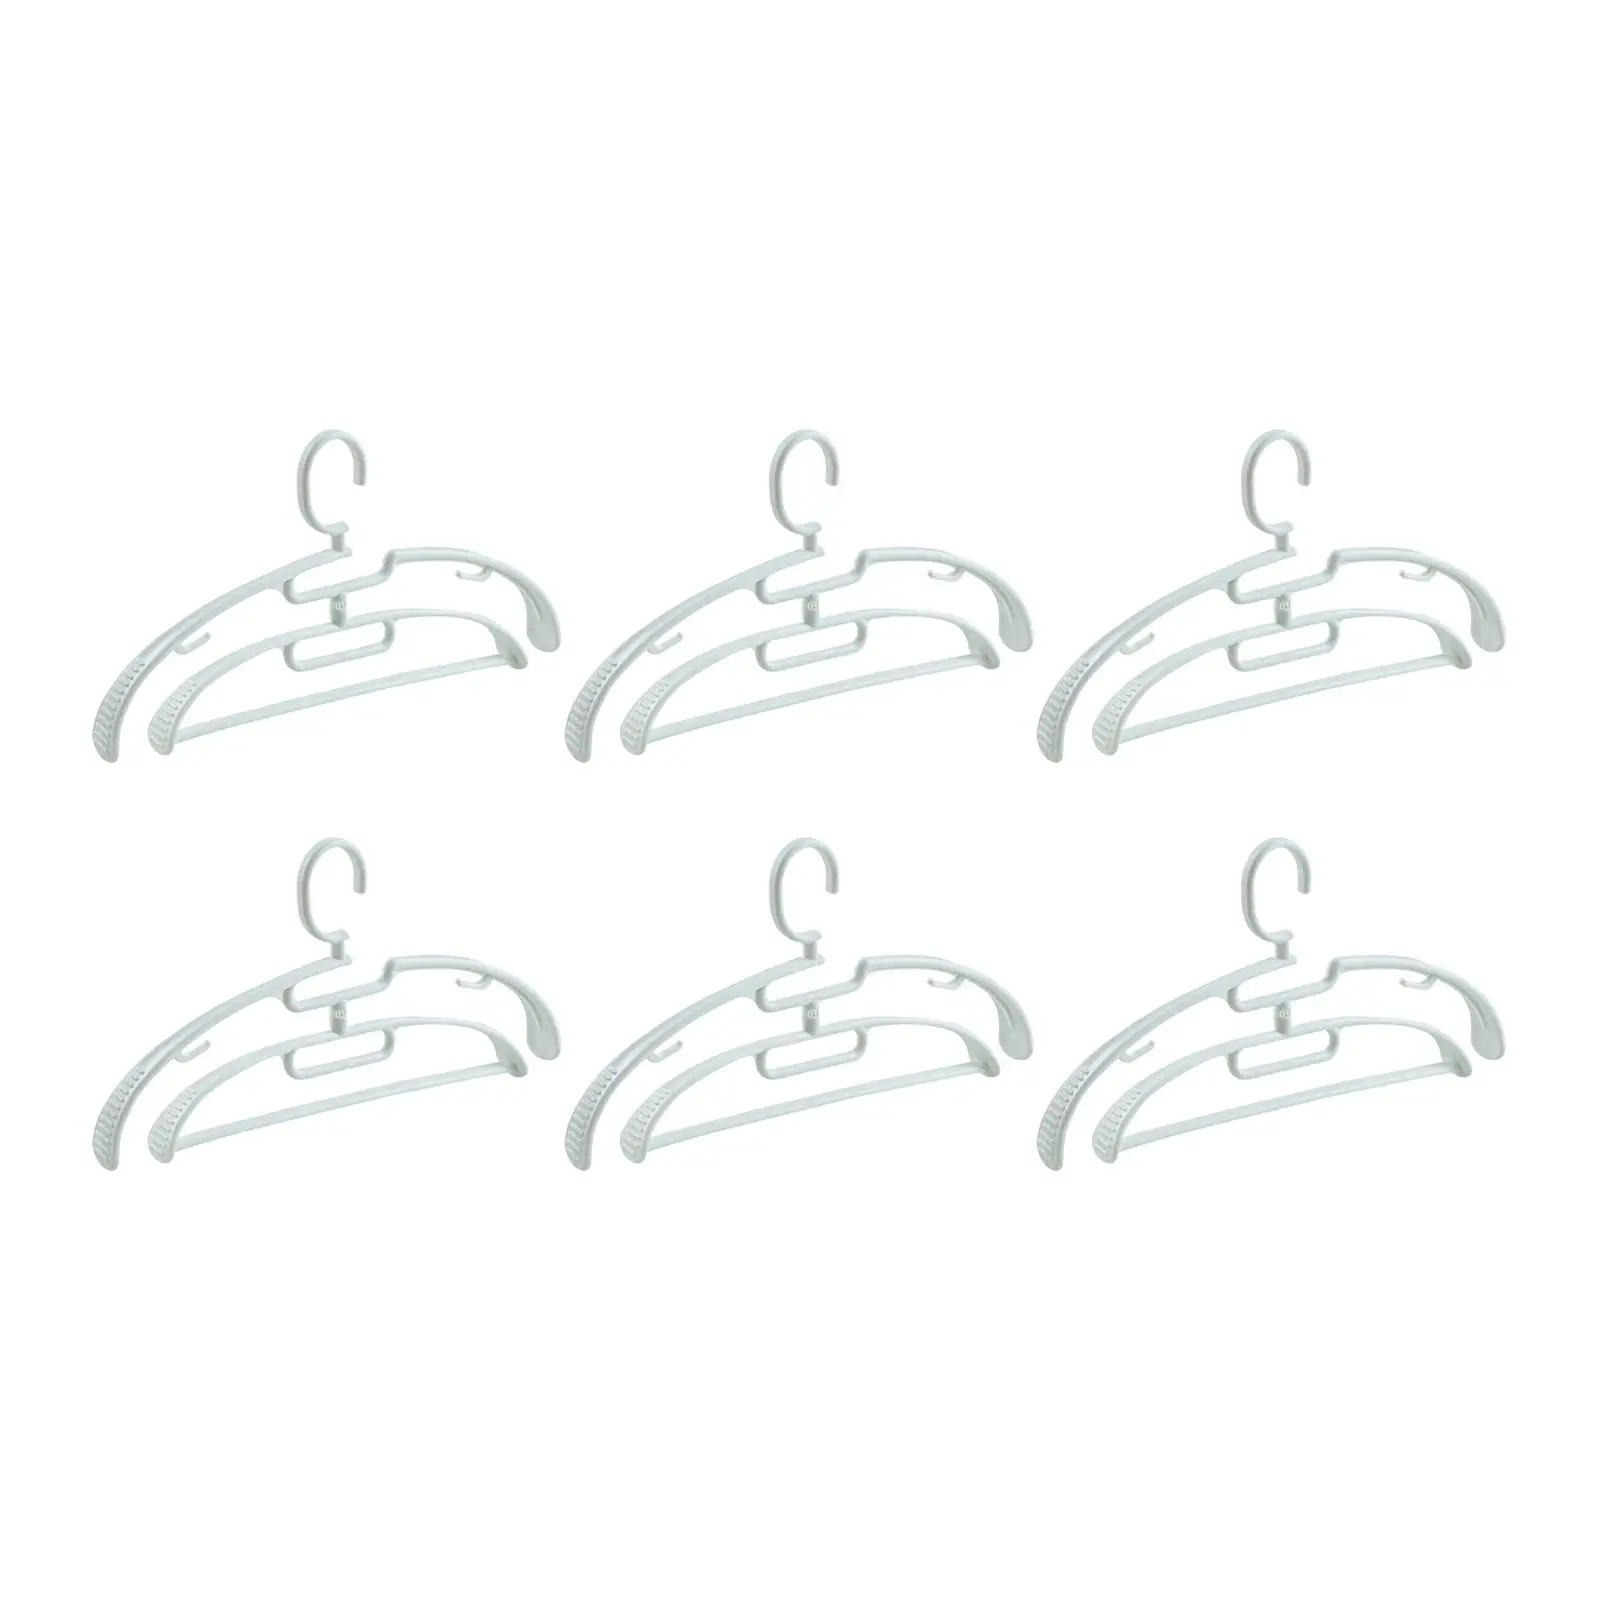 6 Pieces PP Hanger Organizer, Multi-Functional Double-Layer Hanger, -Shoulder